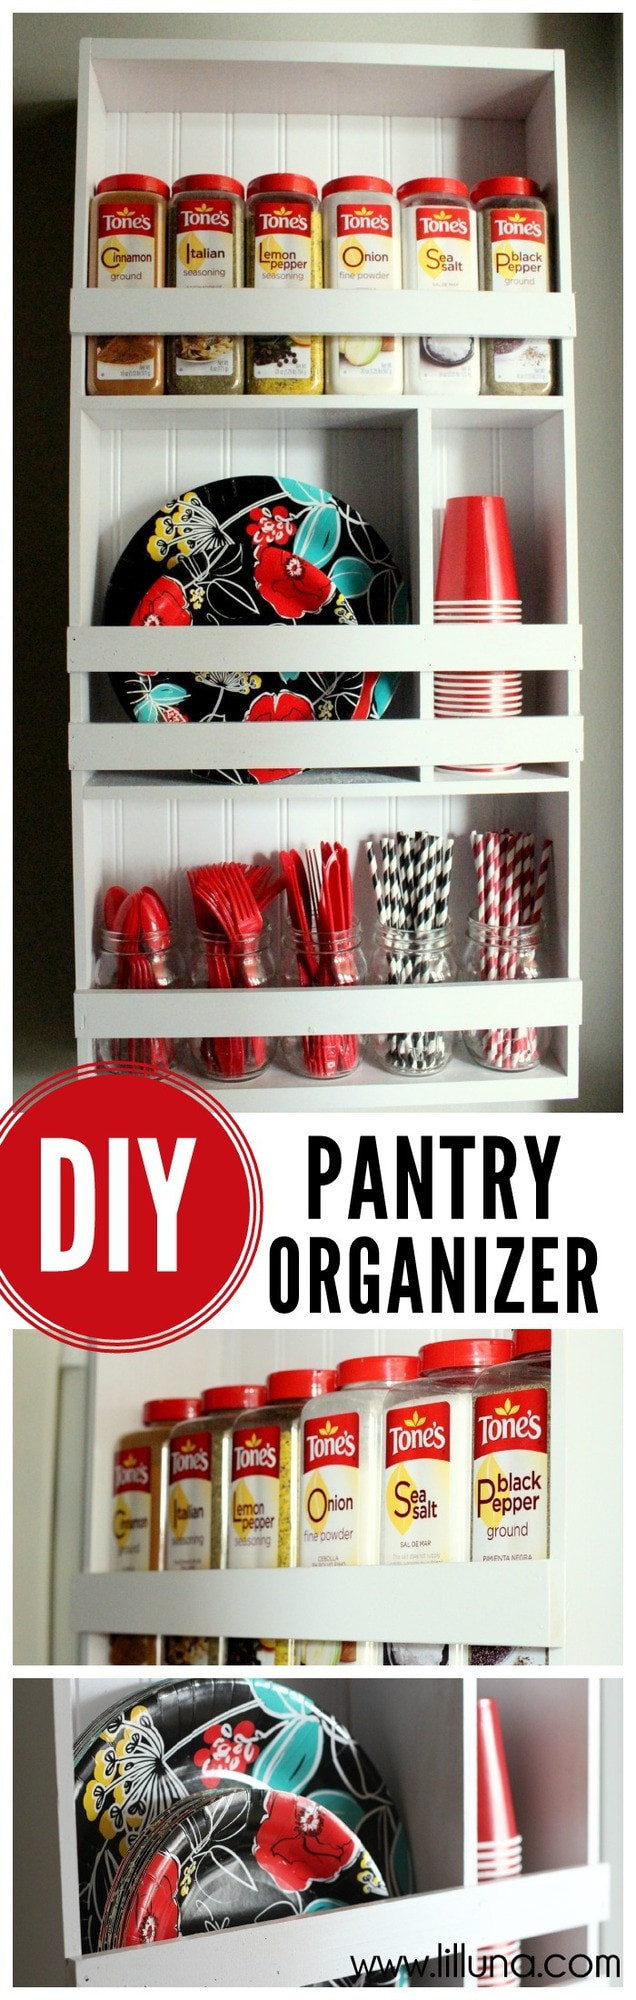 Pantry Can Organizer DIY
 Pantry Organizer Tutorial